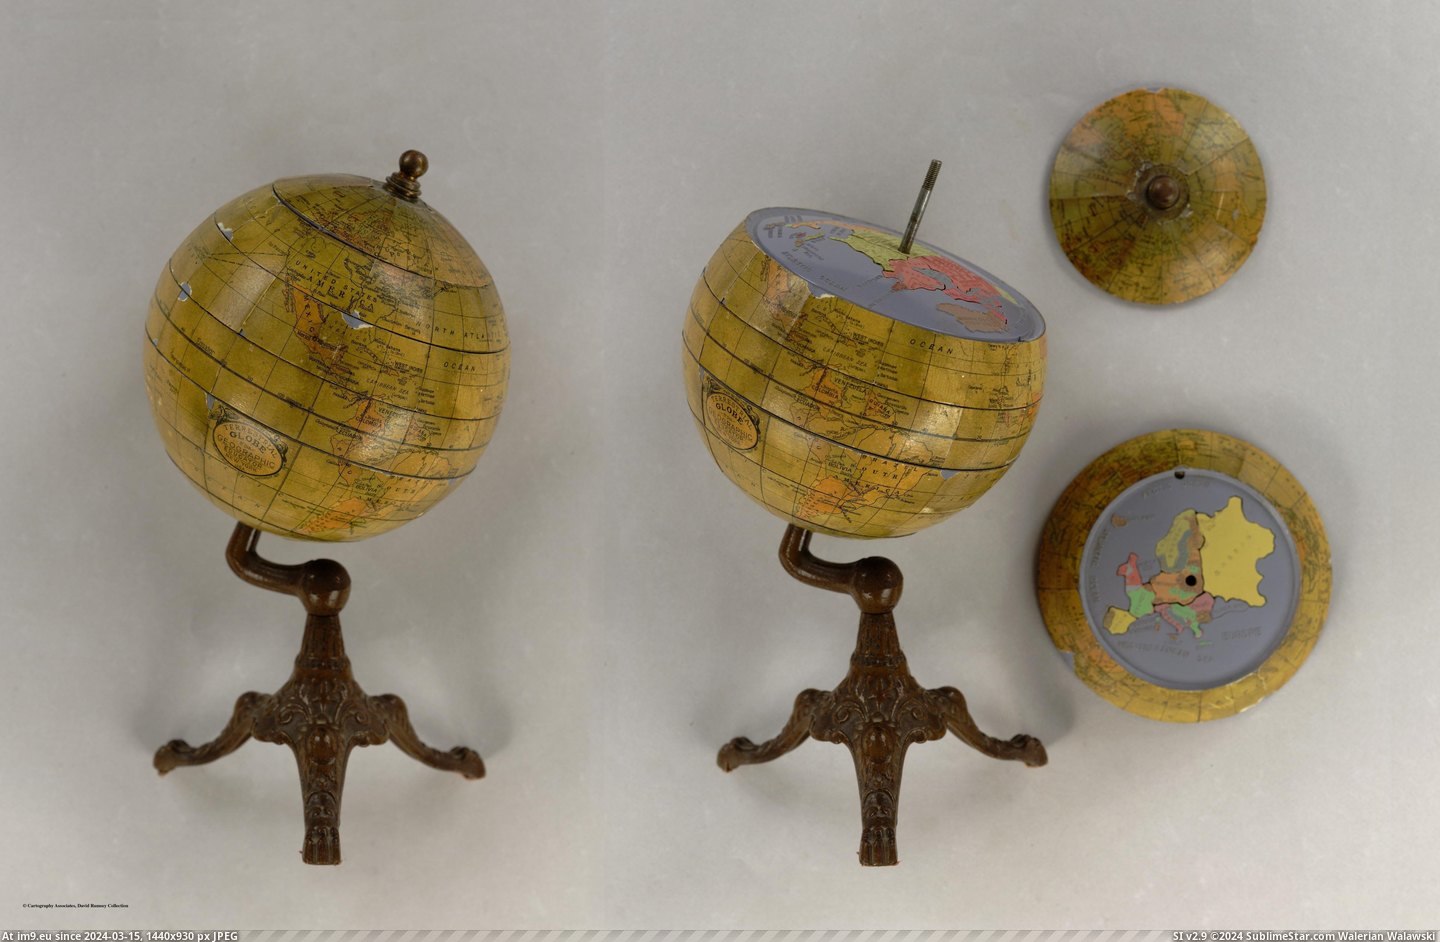 #Globe  #Puzzle [Mapporn] Puzzle Globe from 1927 [3839x2492] Pic. (Bild von album My r/MAPS favs))